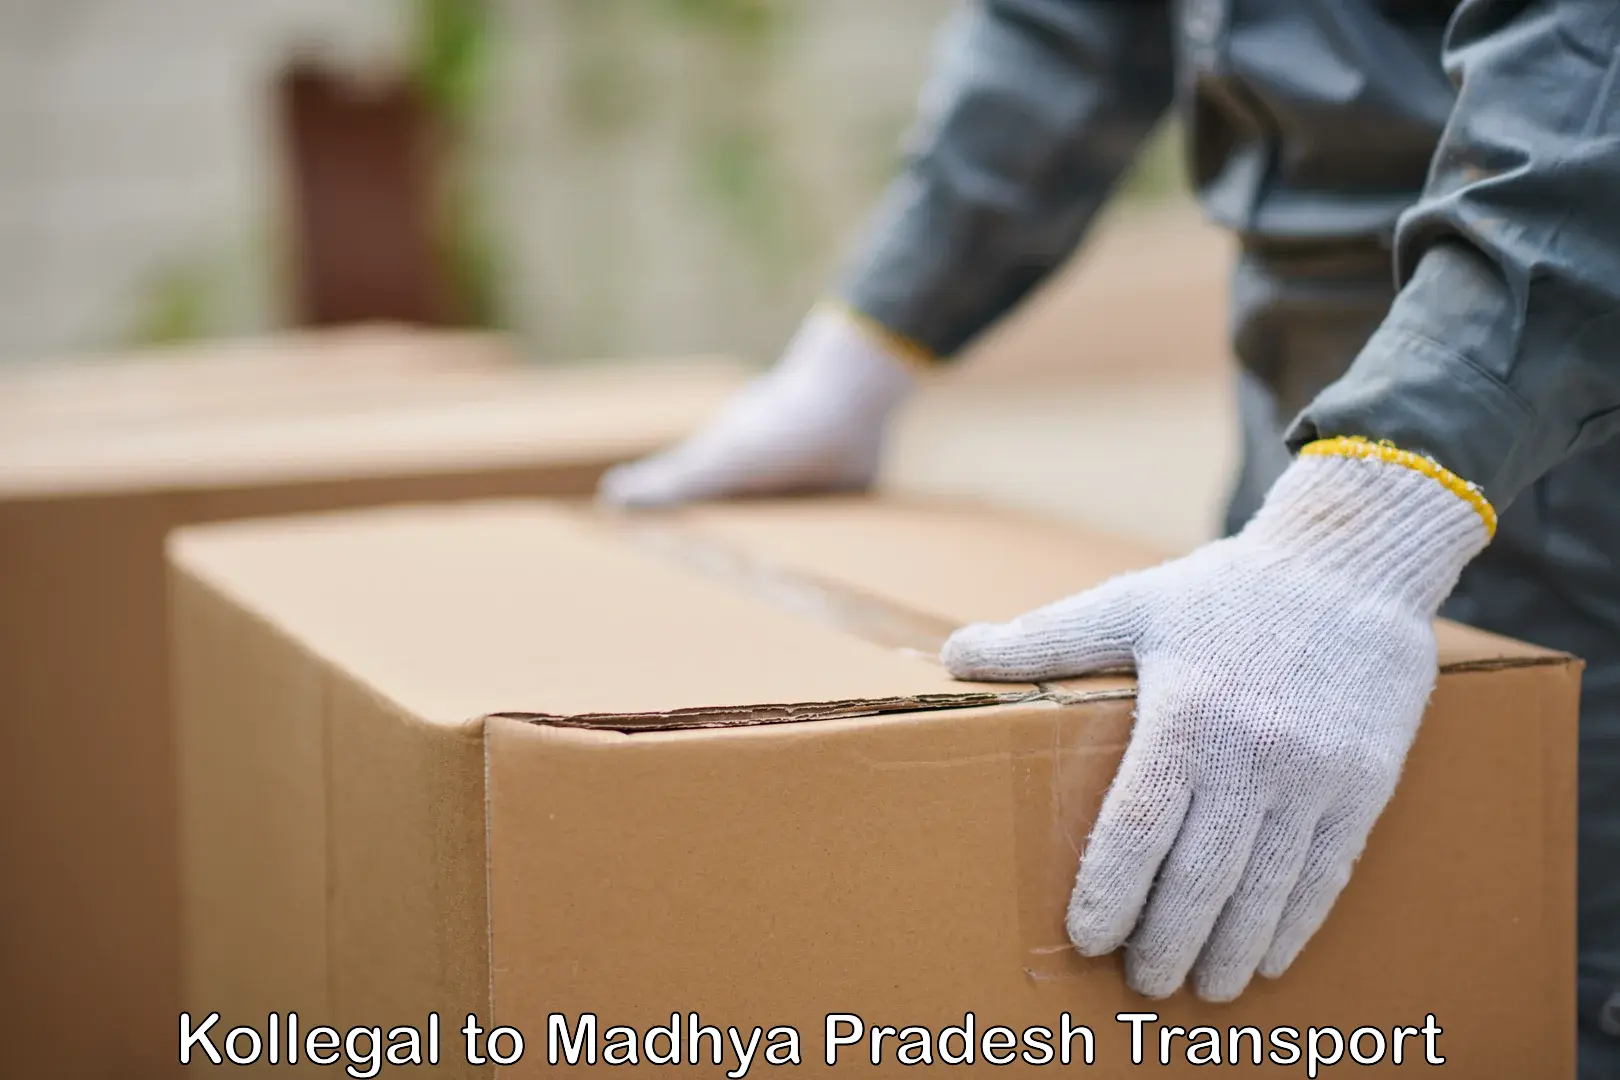 Truck transport companies in India Kollegal to Bargawan